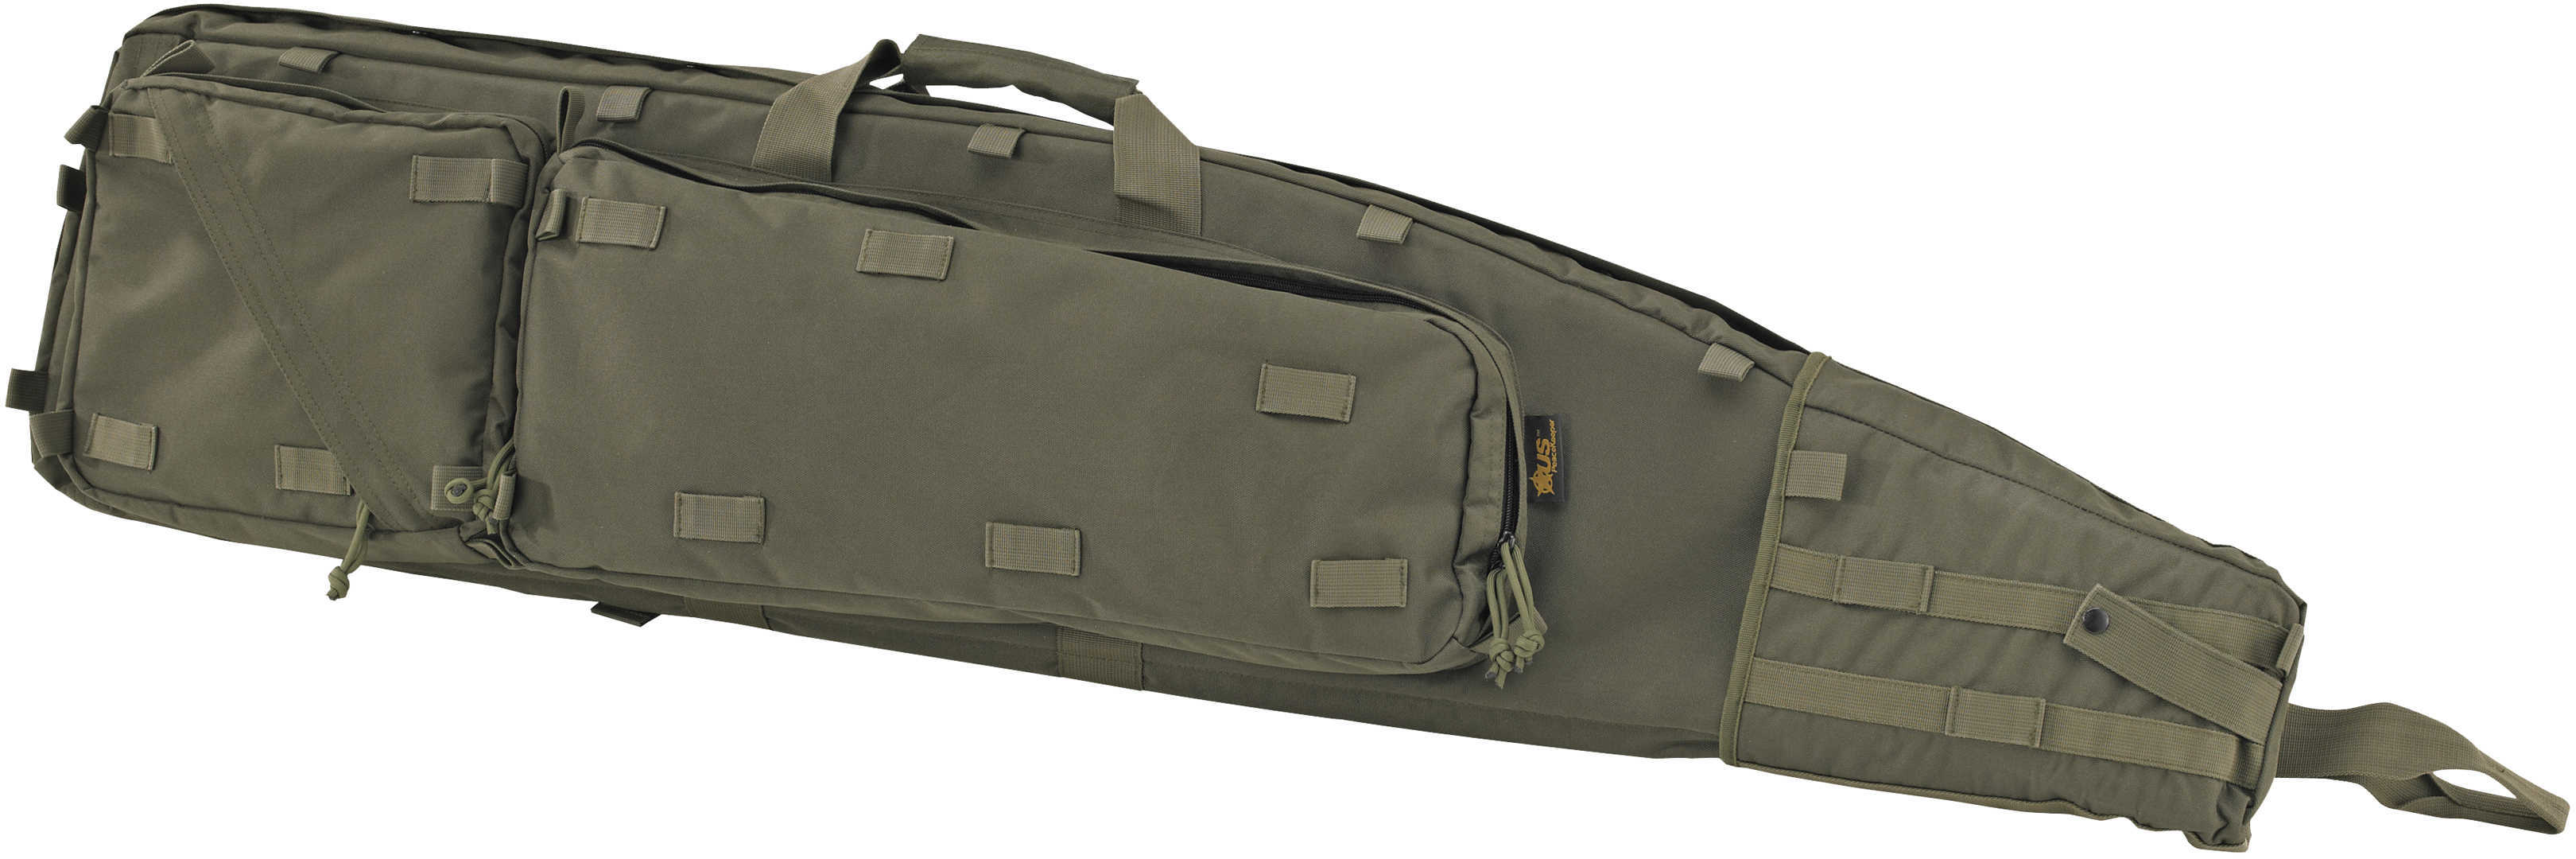 US Peacekeeper s Drag Bag 52in OD Green x 12in 3in P30052